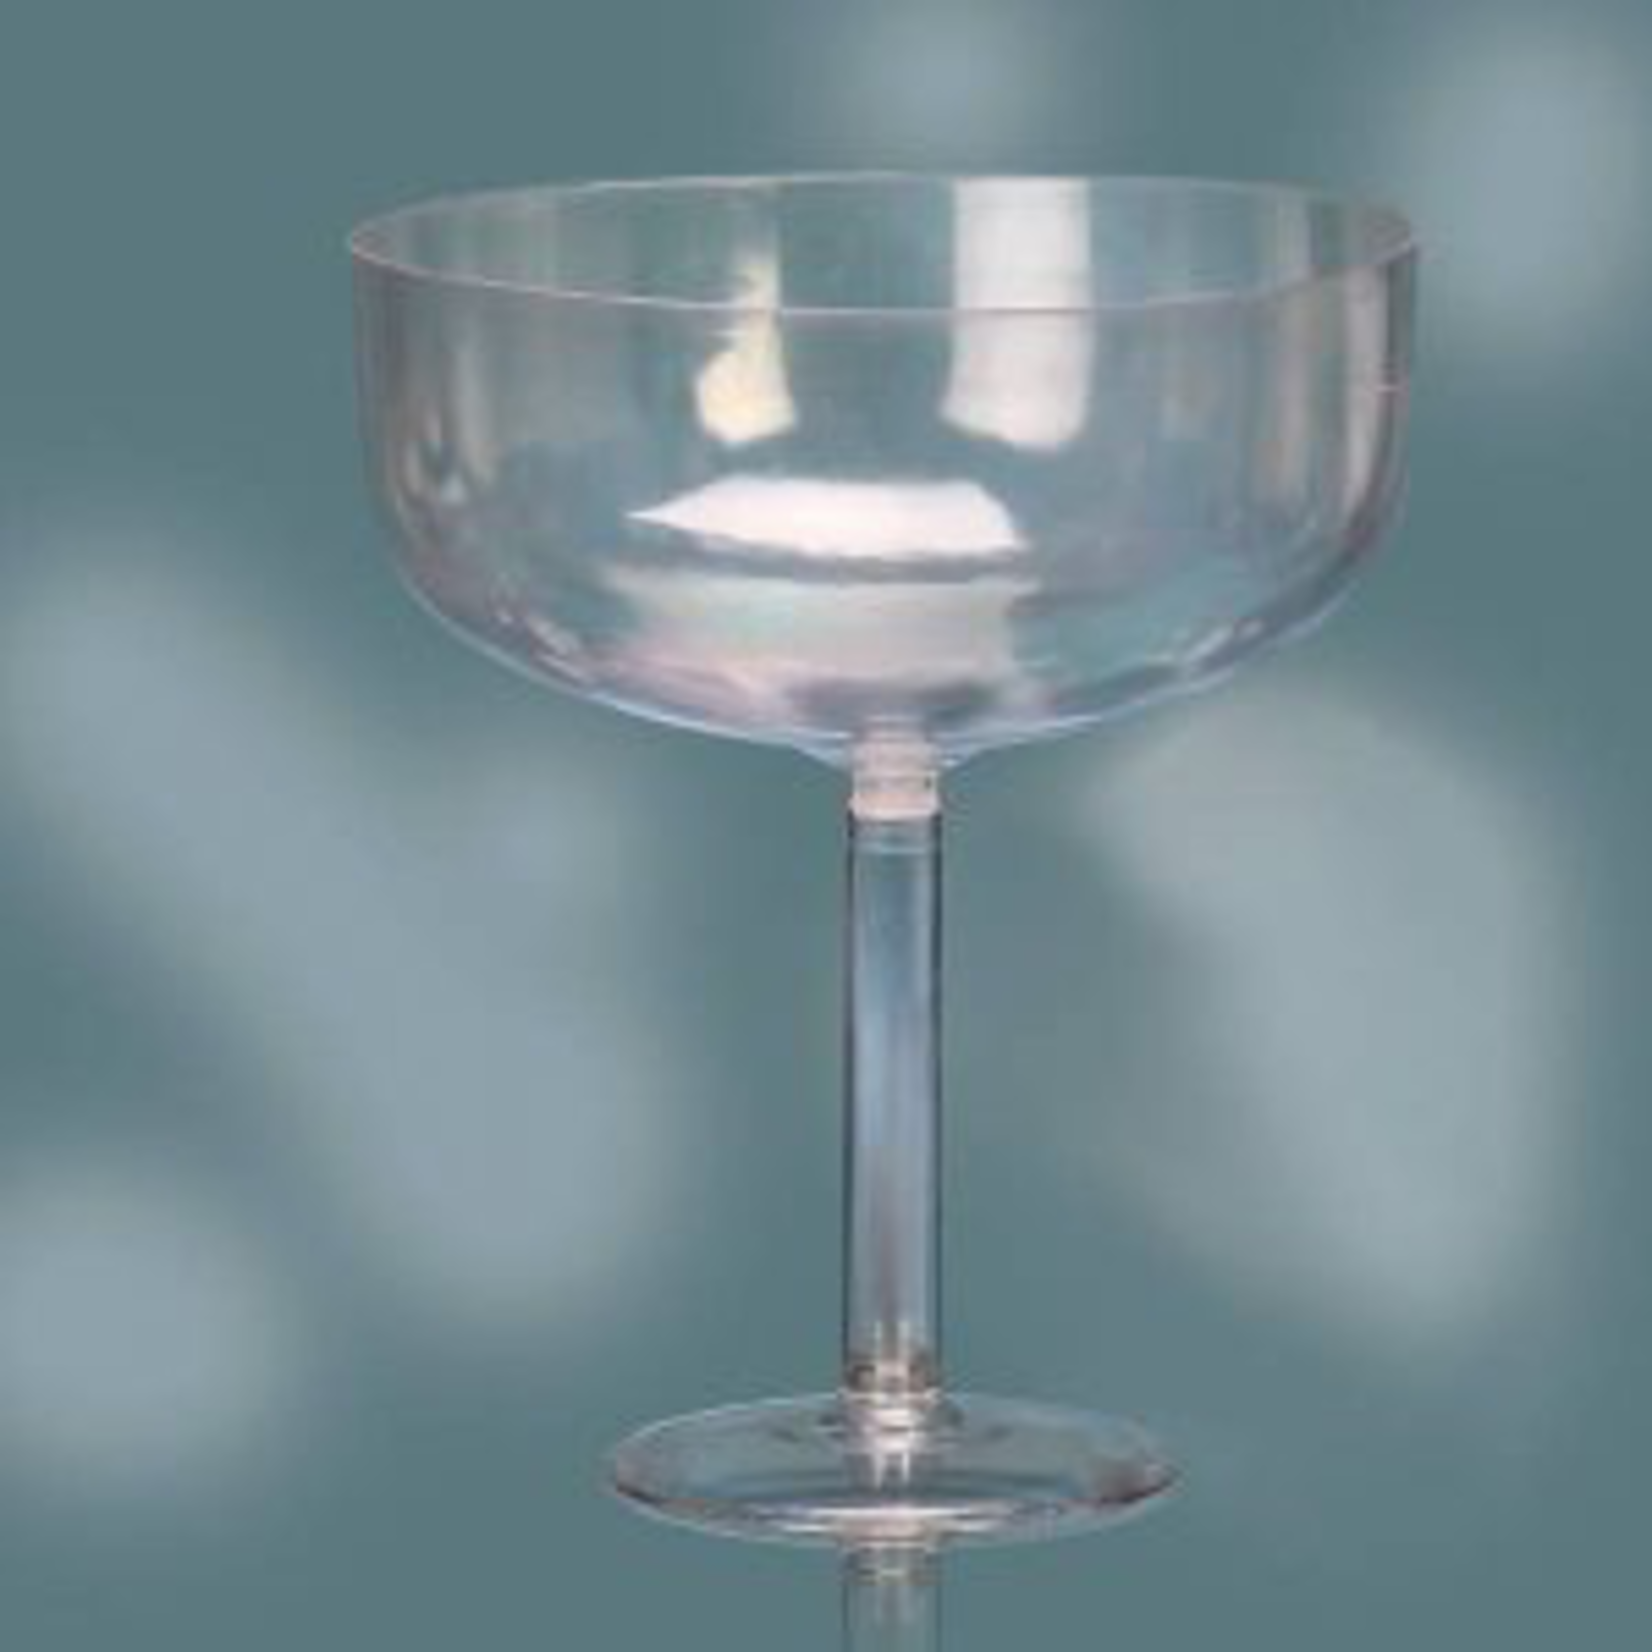 9”” PLASTIC CHAMPAGNE GLASS